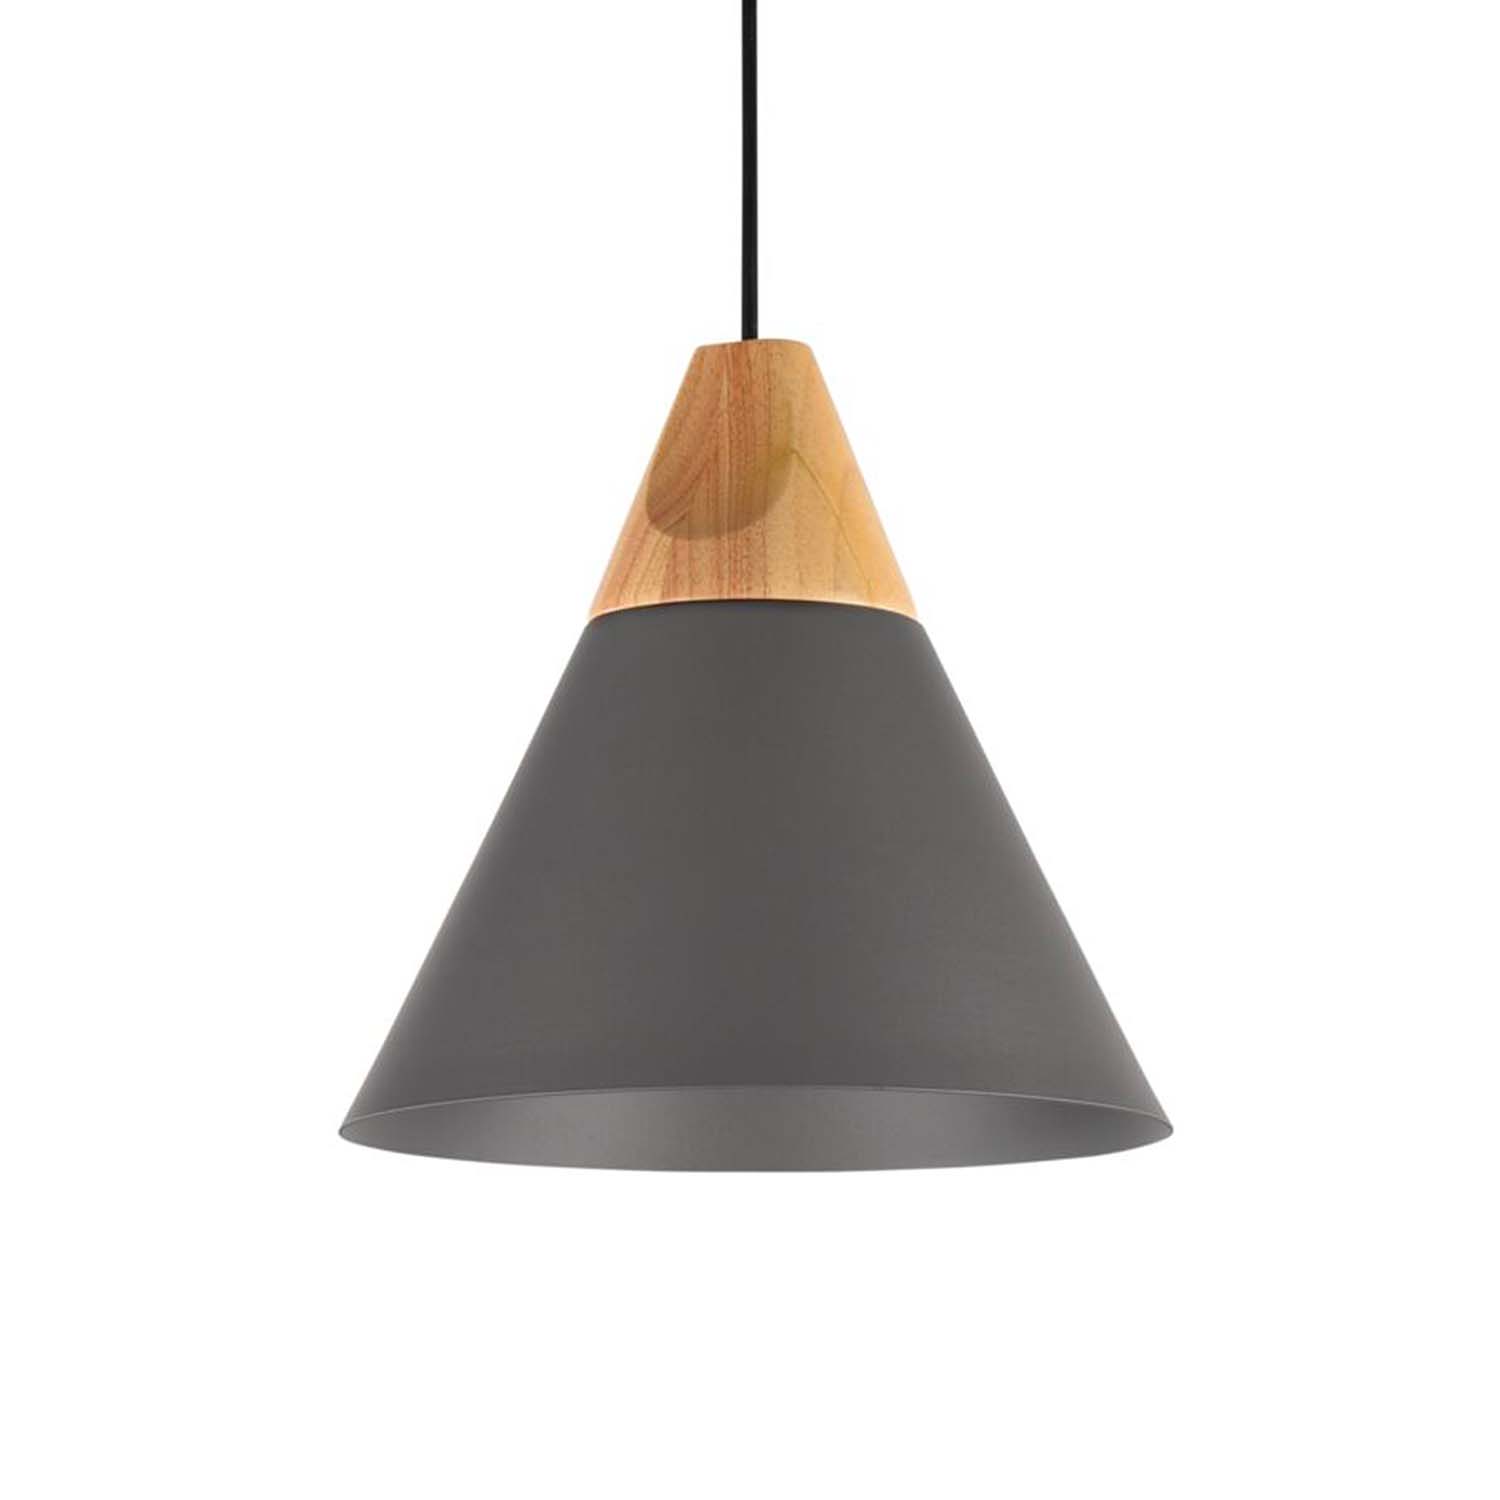 BICONES - Scandinavian wooden and aluminum pendant lamp for kitchen or island